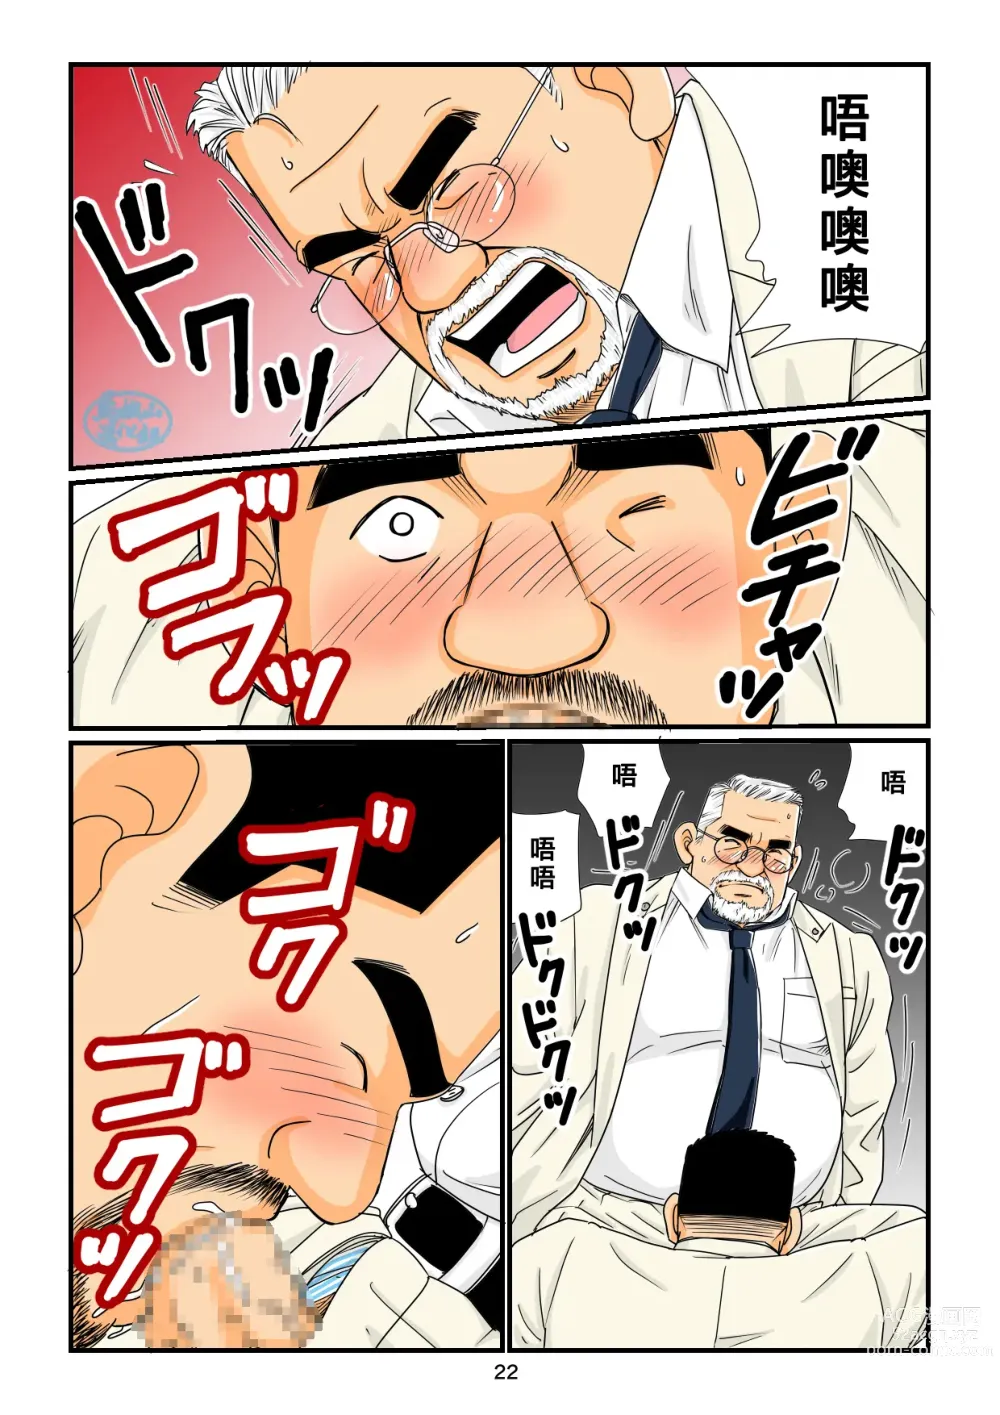 Page 22 of manga 「铁道员的浪漫」 第三回 站长与铁道员之夜